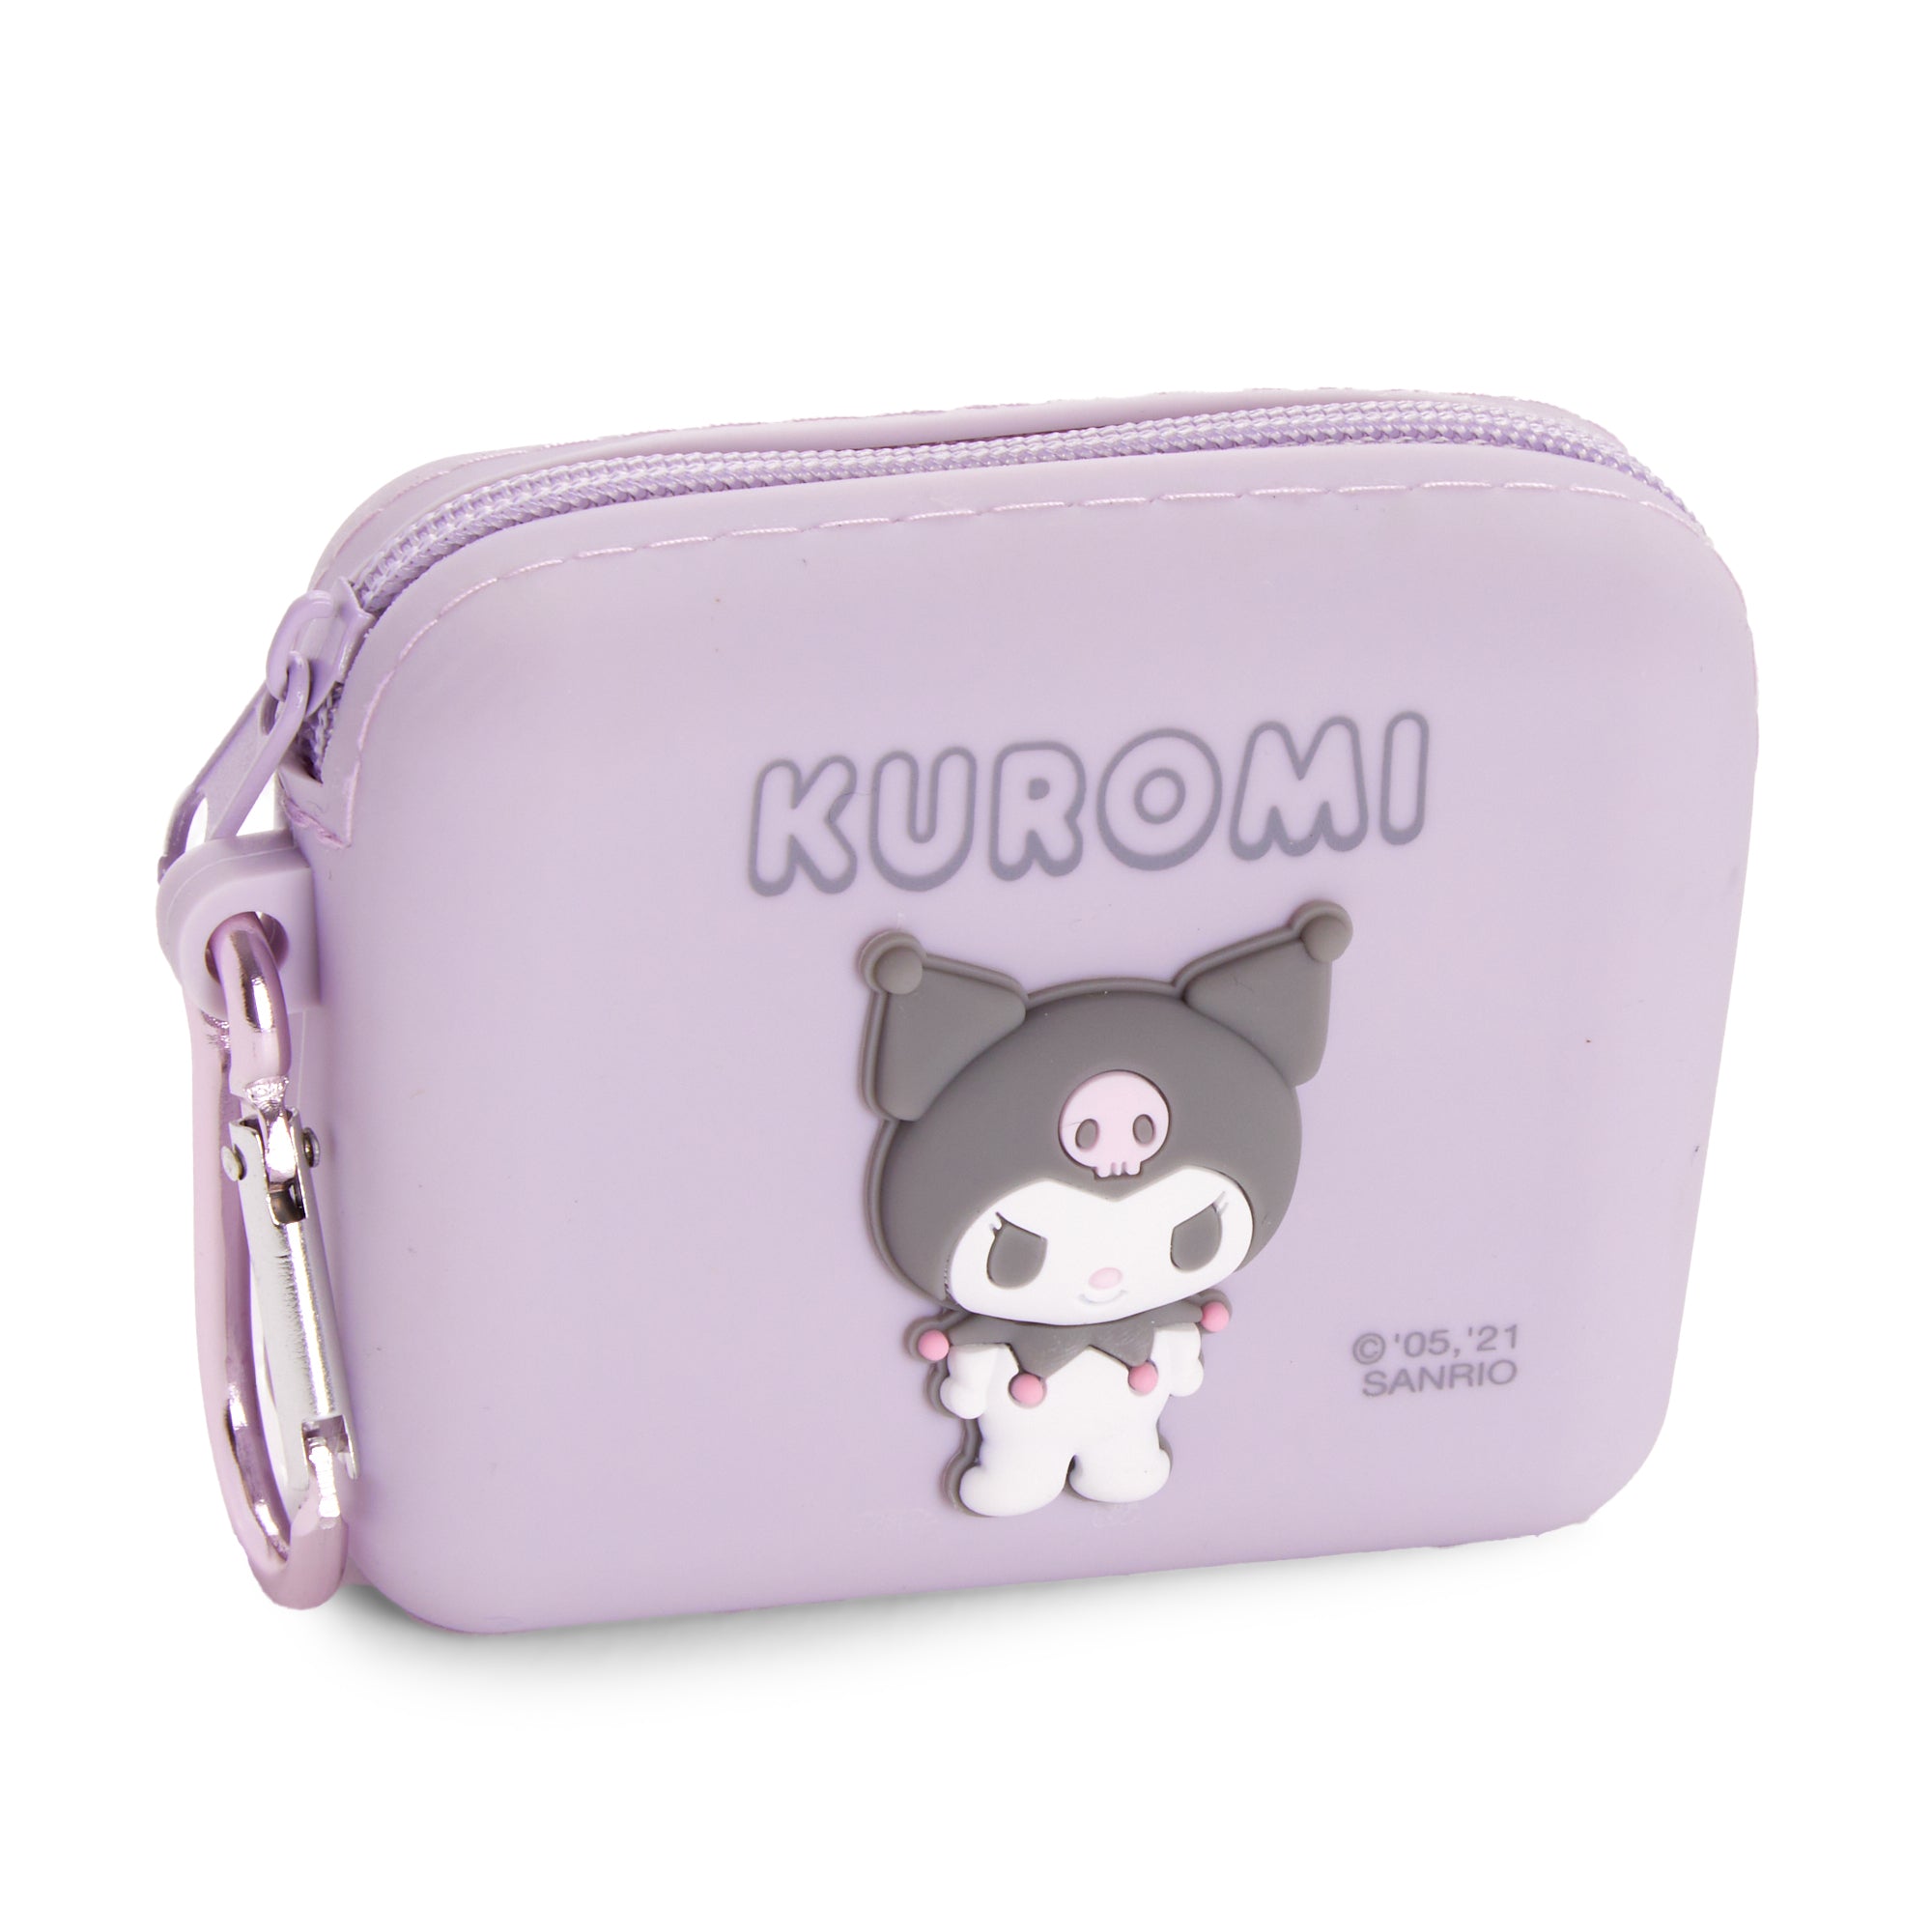 Sanrio Kuromi Silicone Mini Pouch 931306 from Japan